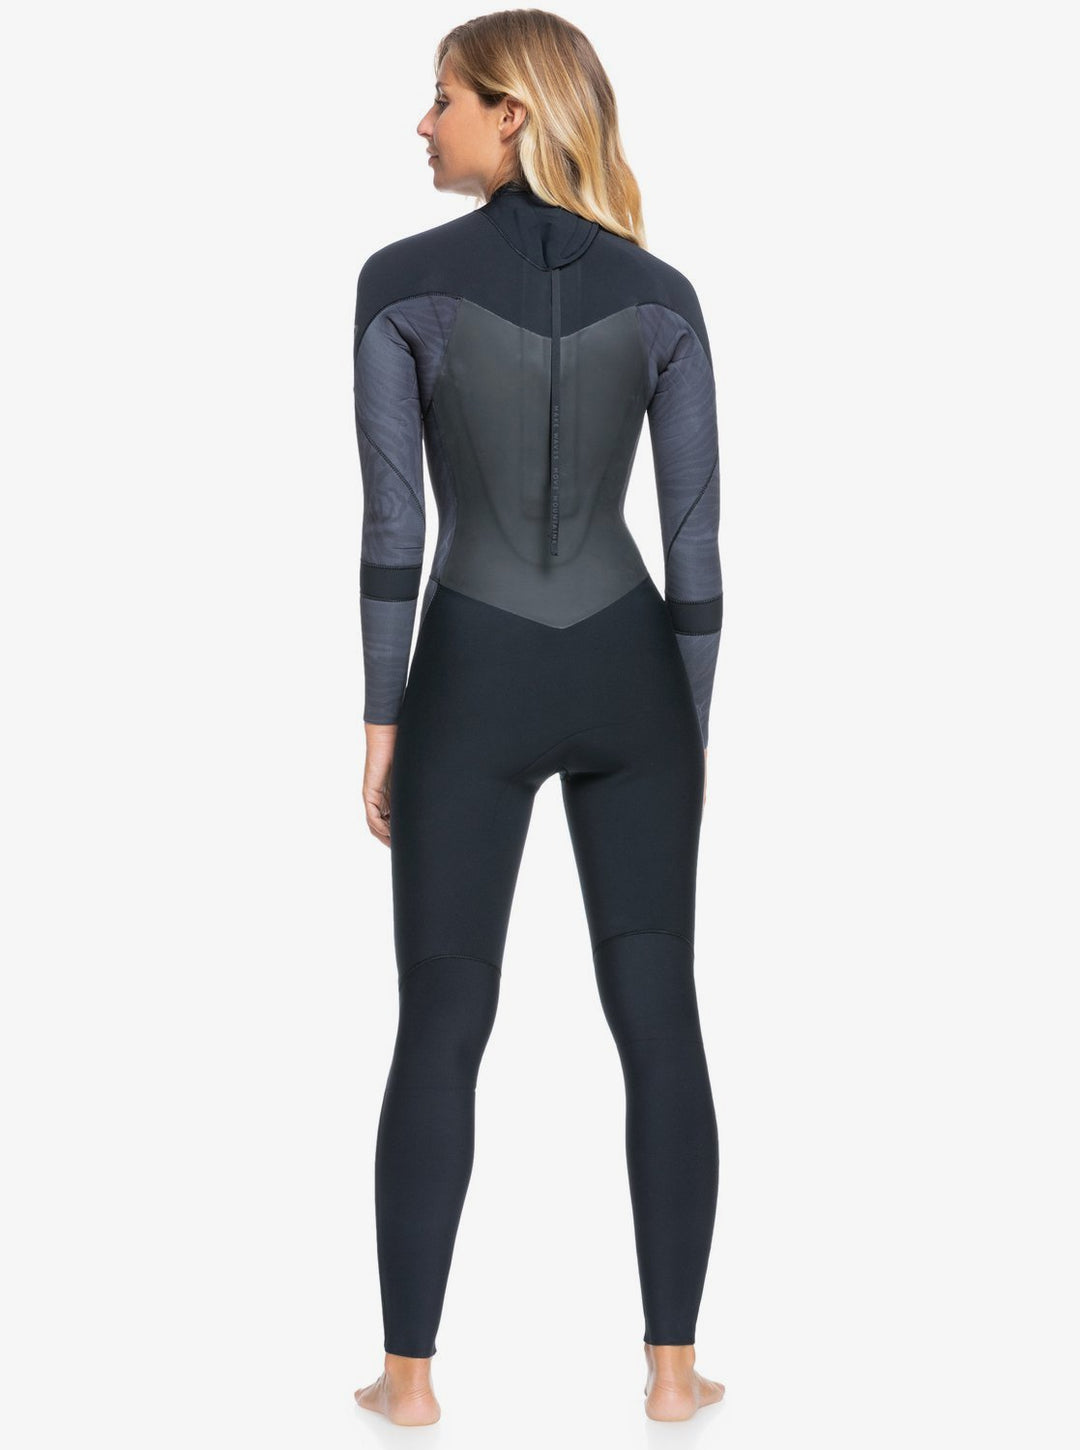 Womens Syncro 3/2 Back Zip Steamer Wetsuit - Jet/Black